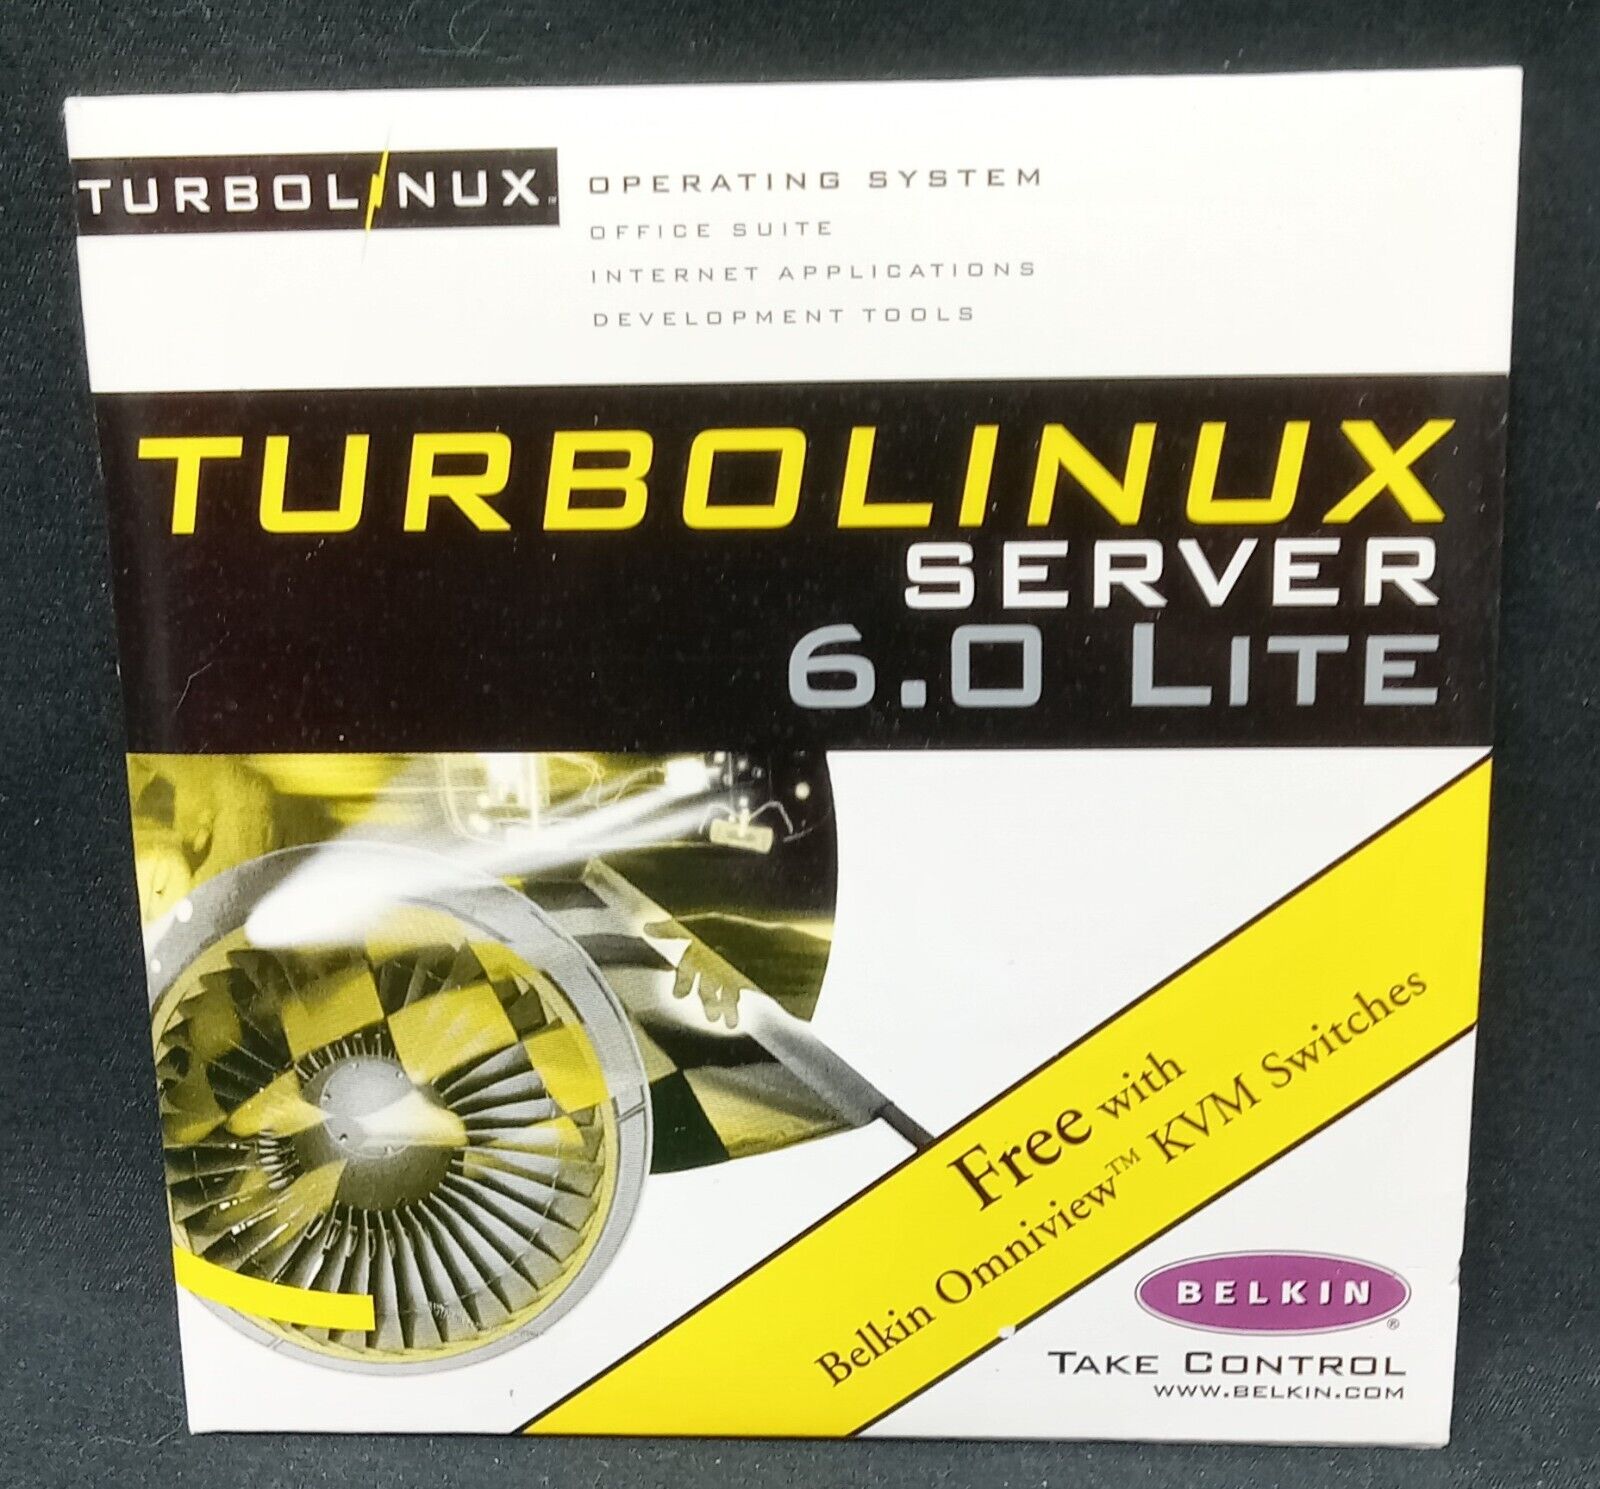 Turbolinux Operating System Server 6.0 Lite CD Belkin